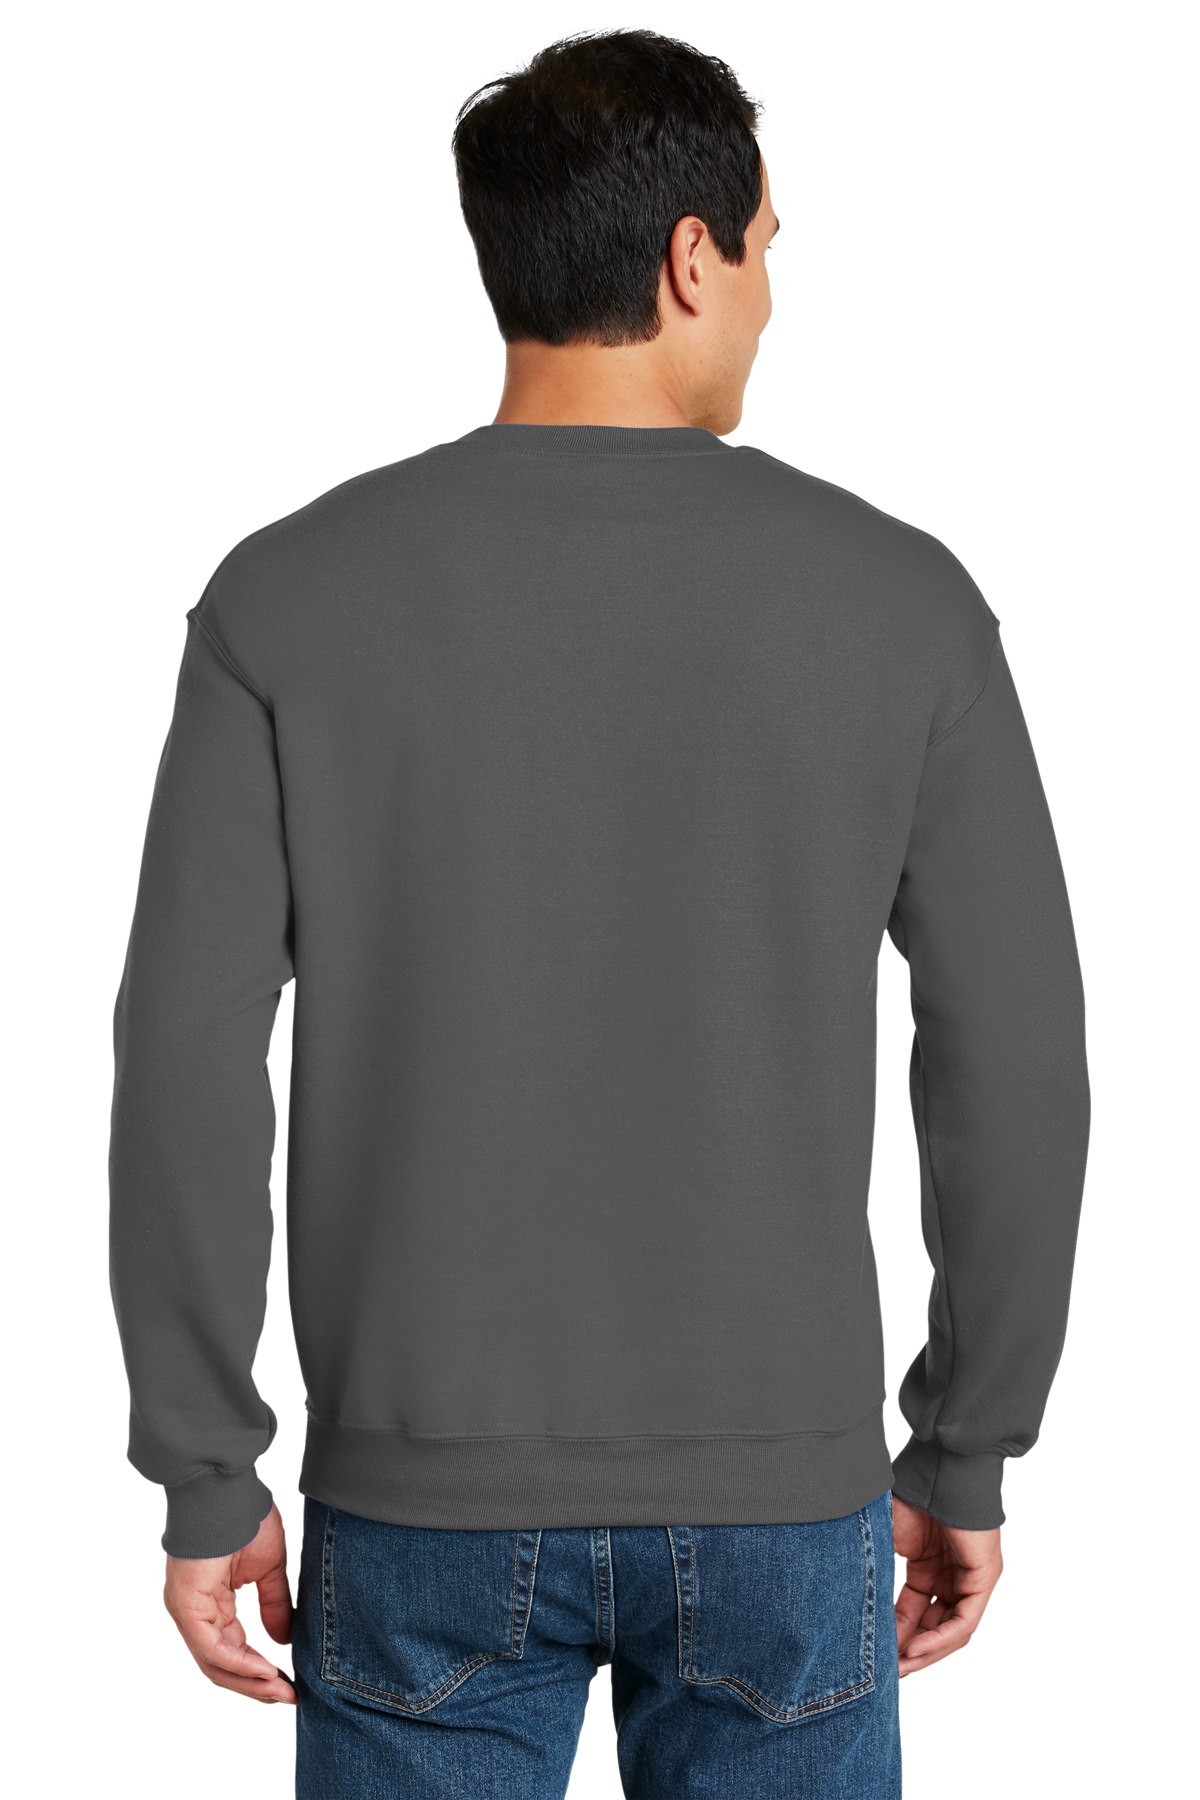 Gildan - DryBlend Crewneck Sweatshirt | Product | Company Casuals